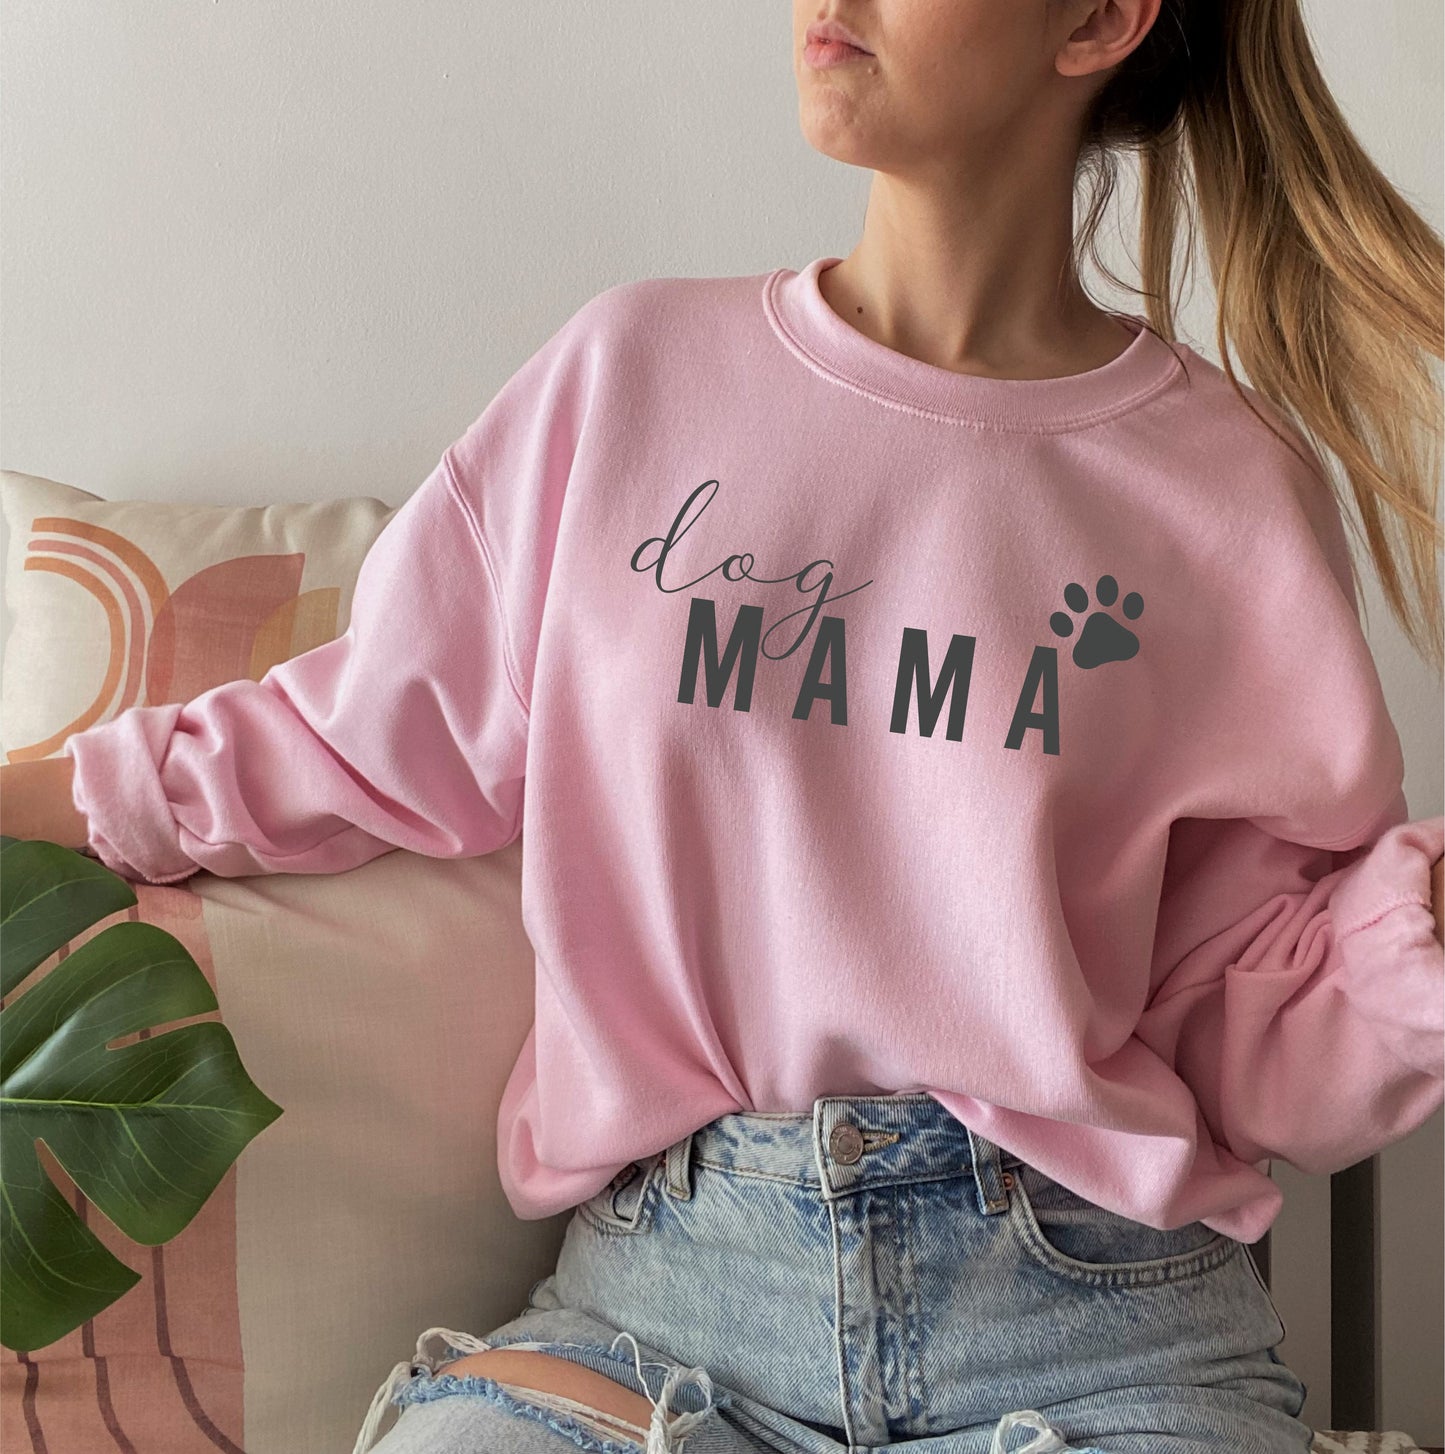 Pink with grey Dog mama text sweatshirt by F&B Crafts